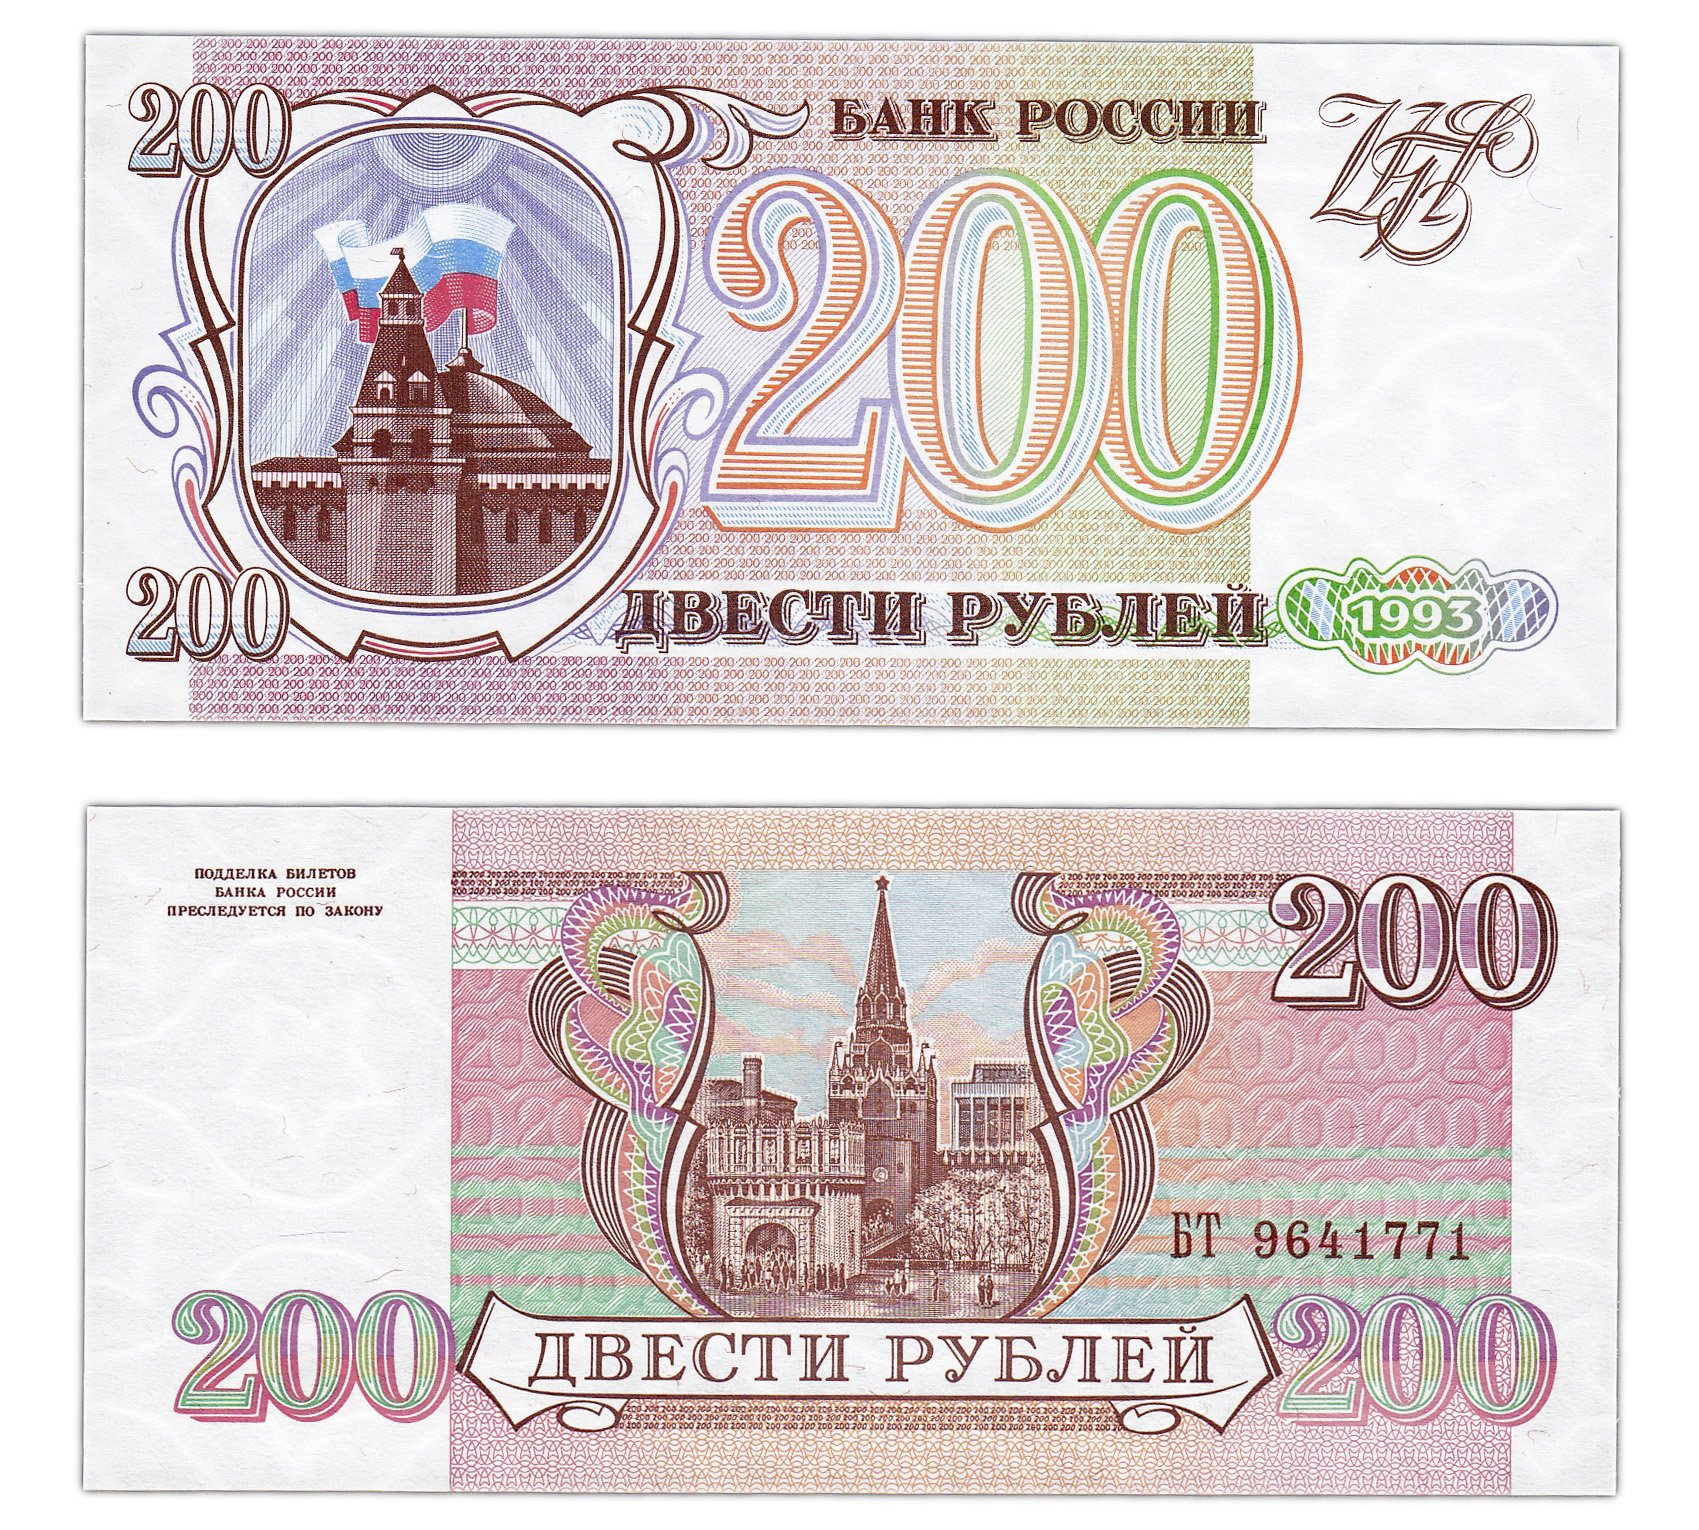 200 рублей 90. Банкнота 200 рублей 1993. 200 Рублей 1993 года. Купюра 200 рублей 1993. Купюра 200 рублей 1993 года.